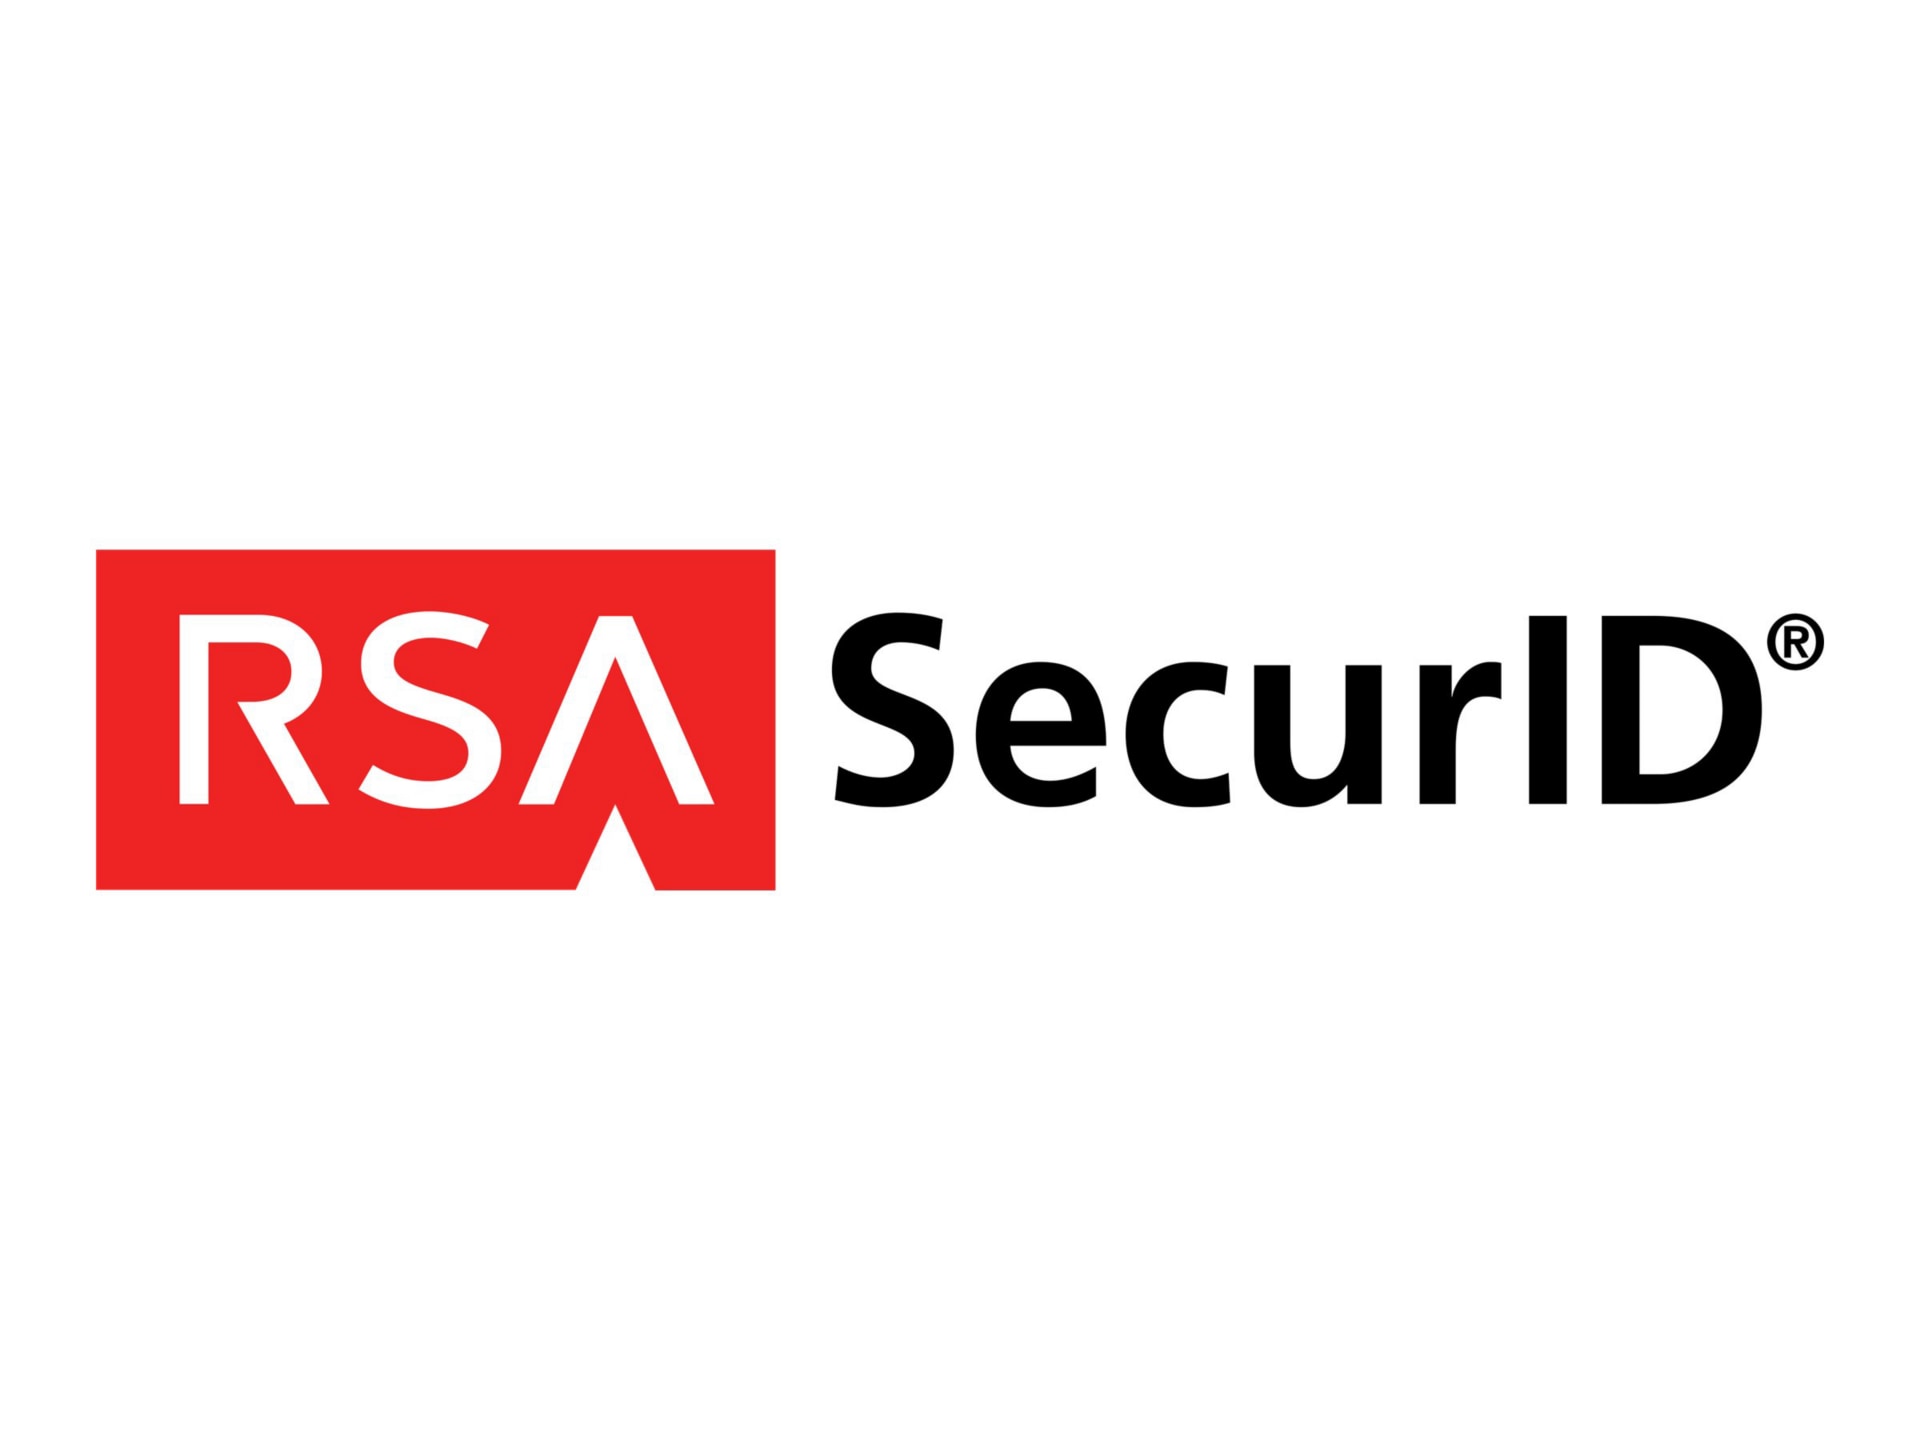 RSA SecurID Appliance Enterprise Software - product upgrade license - 1 use